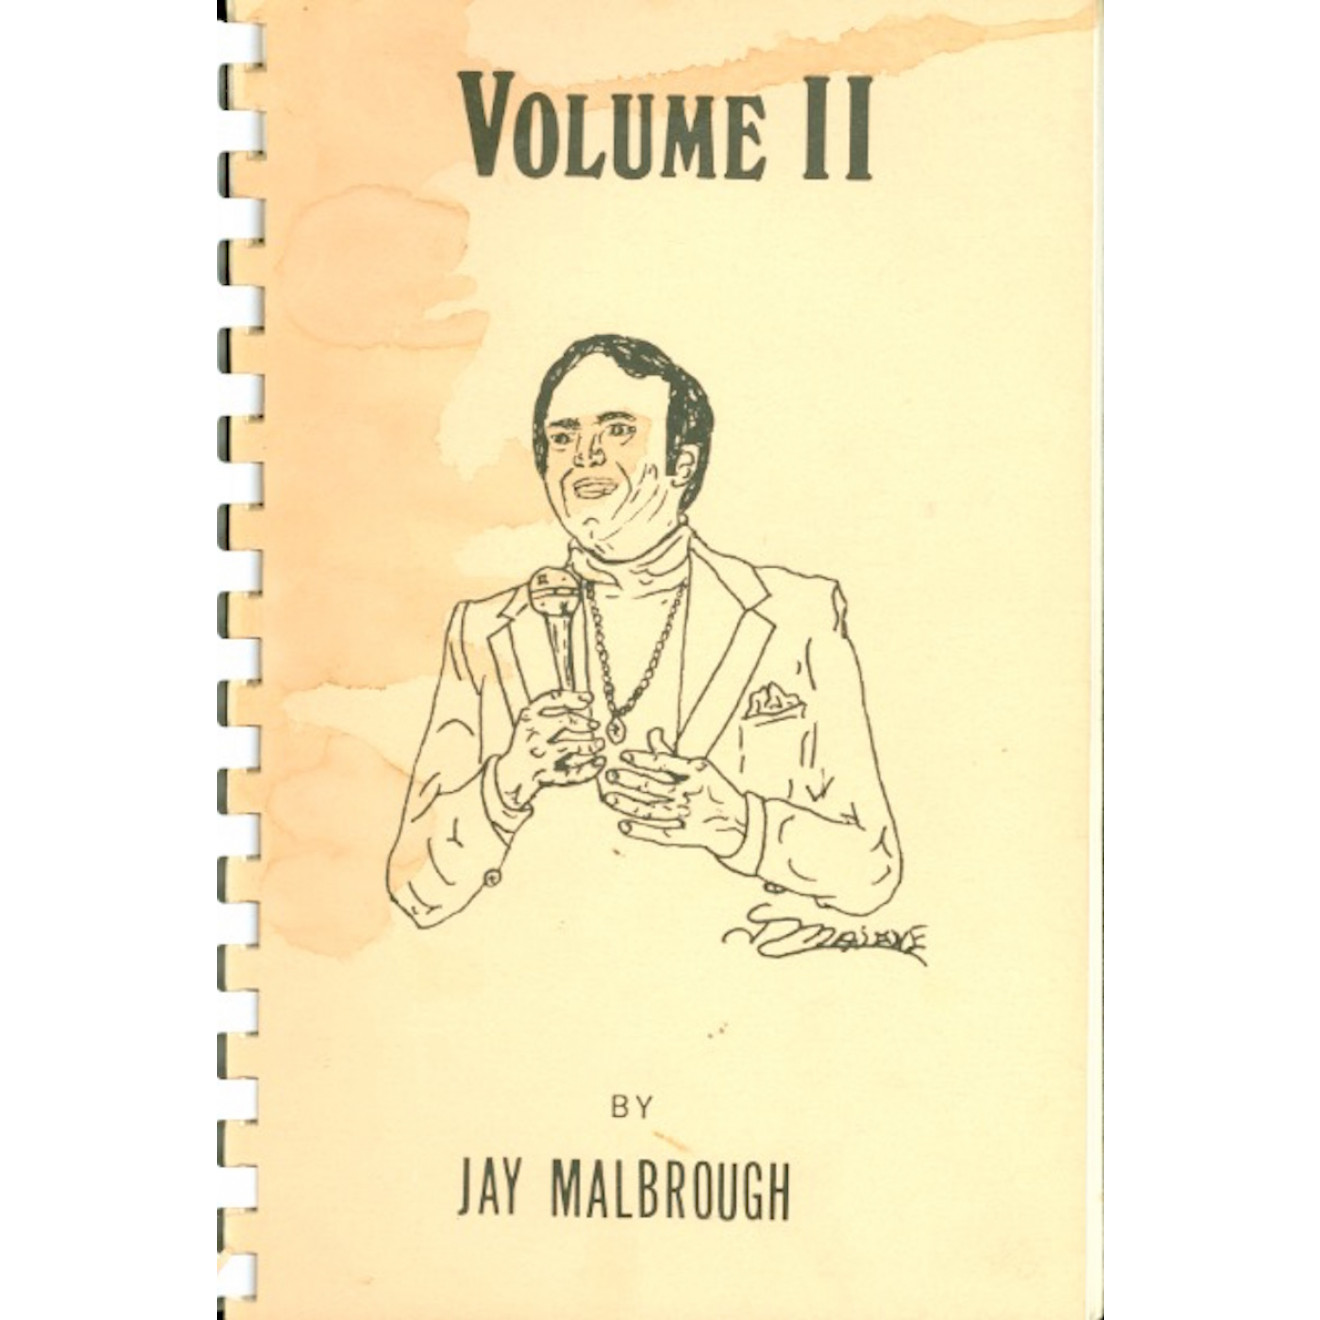 Volume II